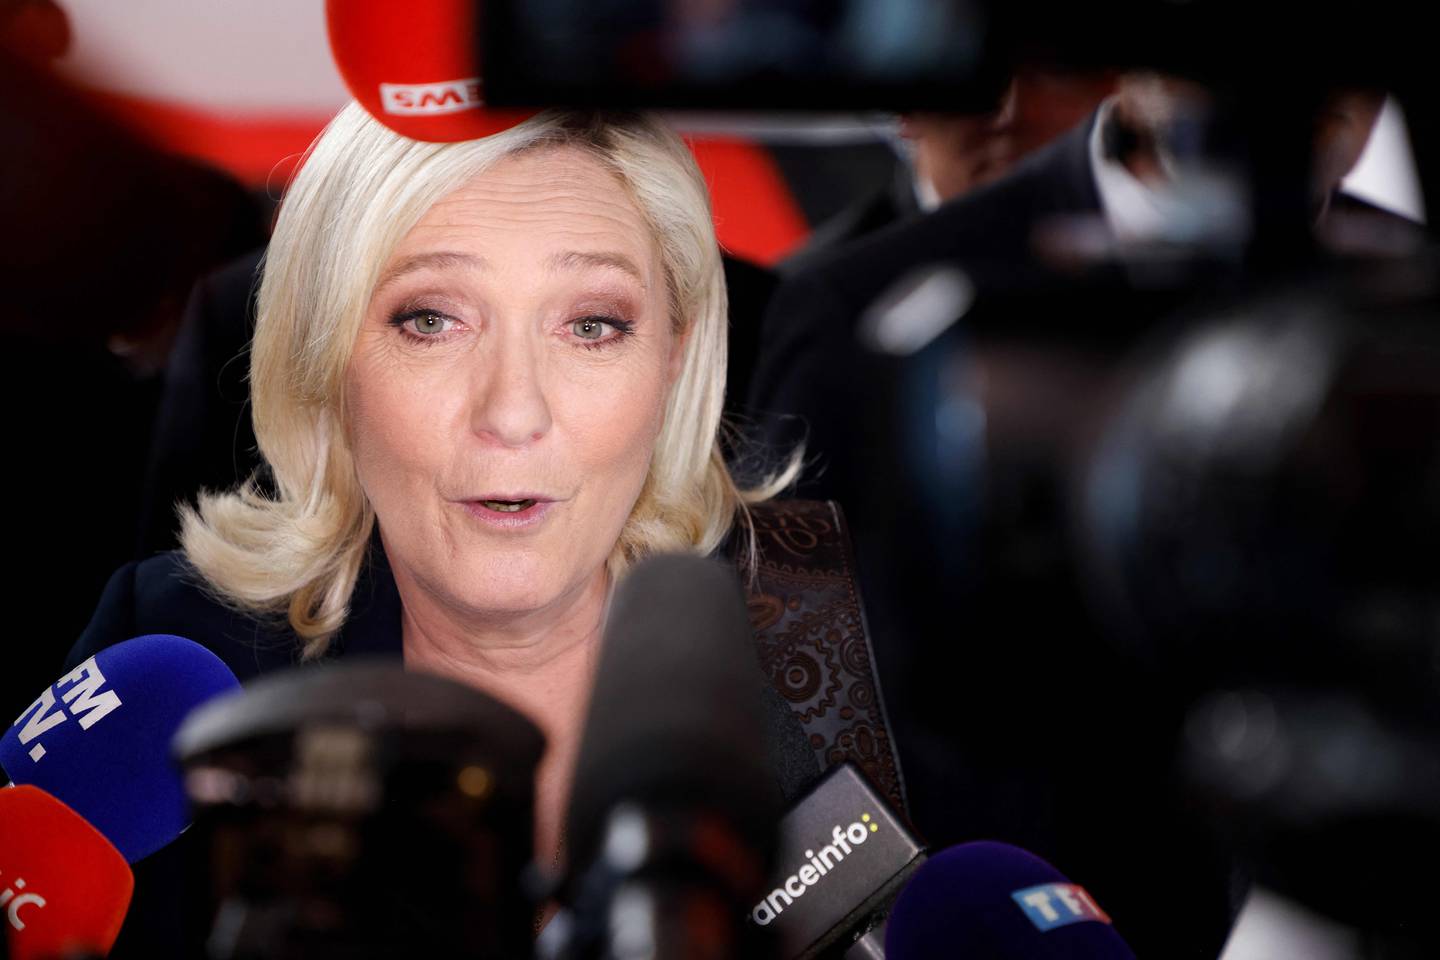 Marine Le Pen speaks to the press after a live televised debate with Emmanuel Macron, in Saint-Denis. AFP